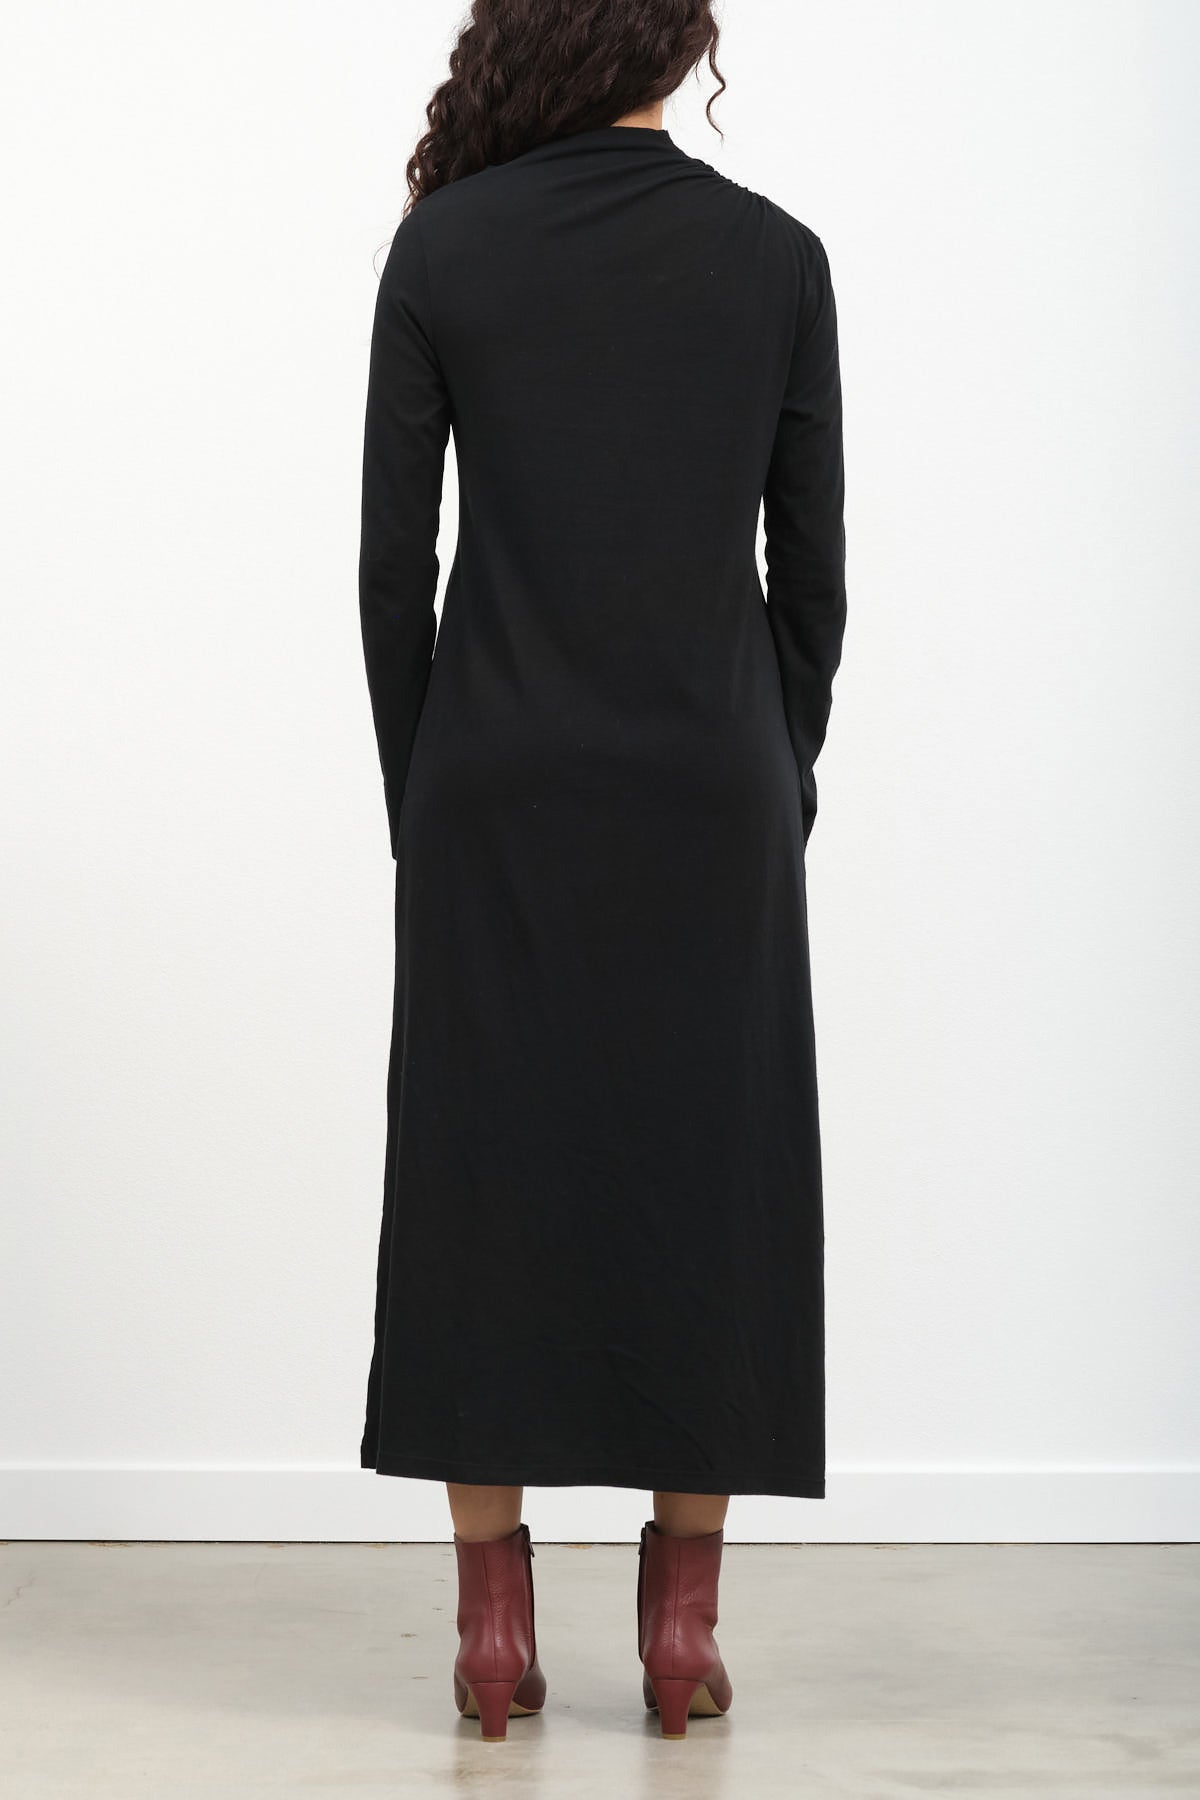 Atelier Delphine Lille Dress in Black